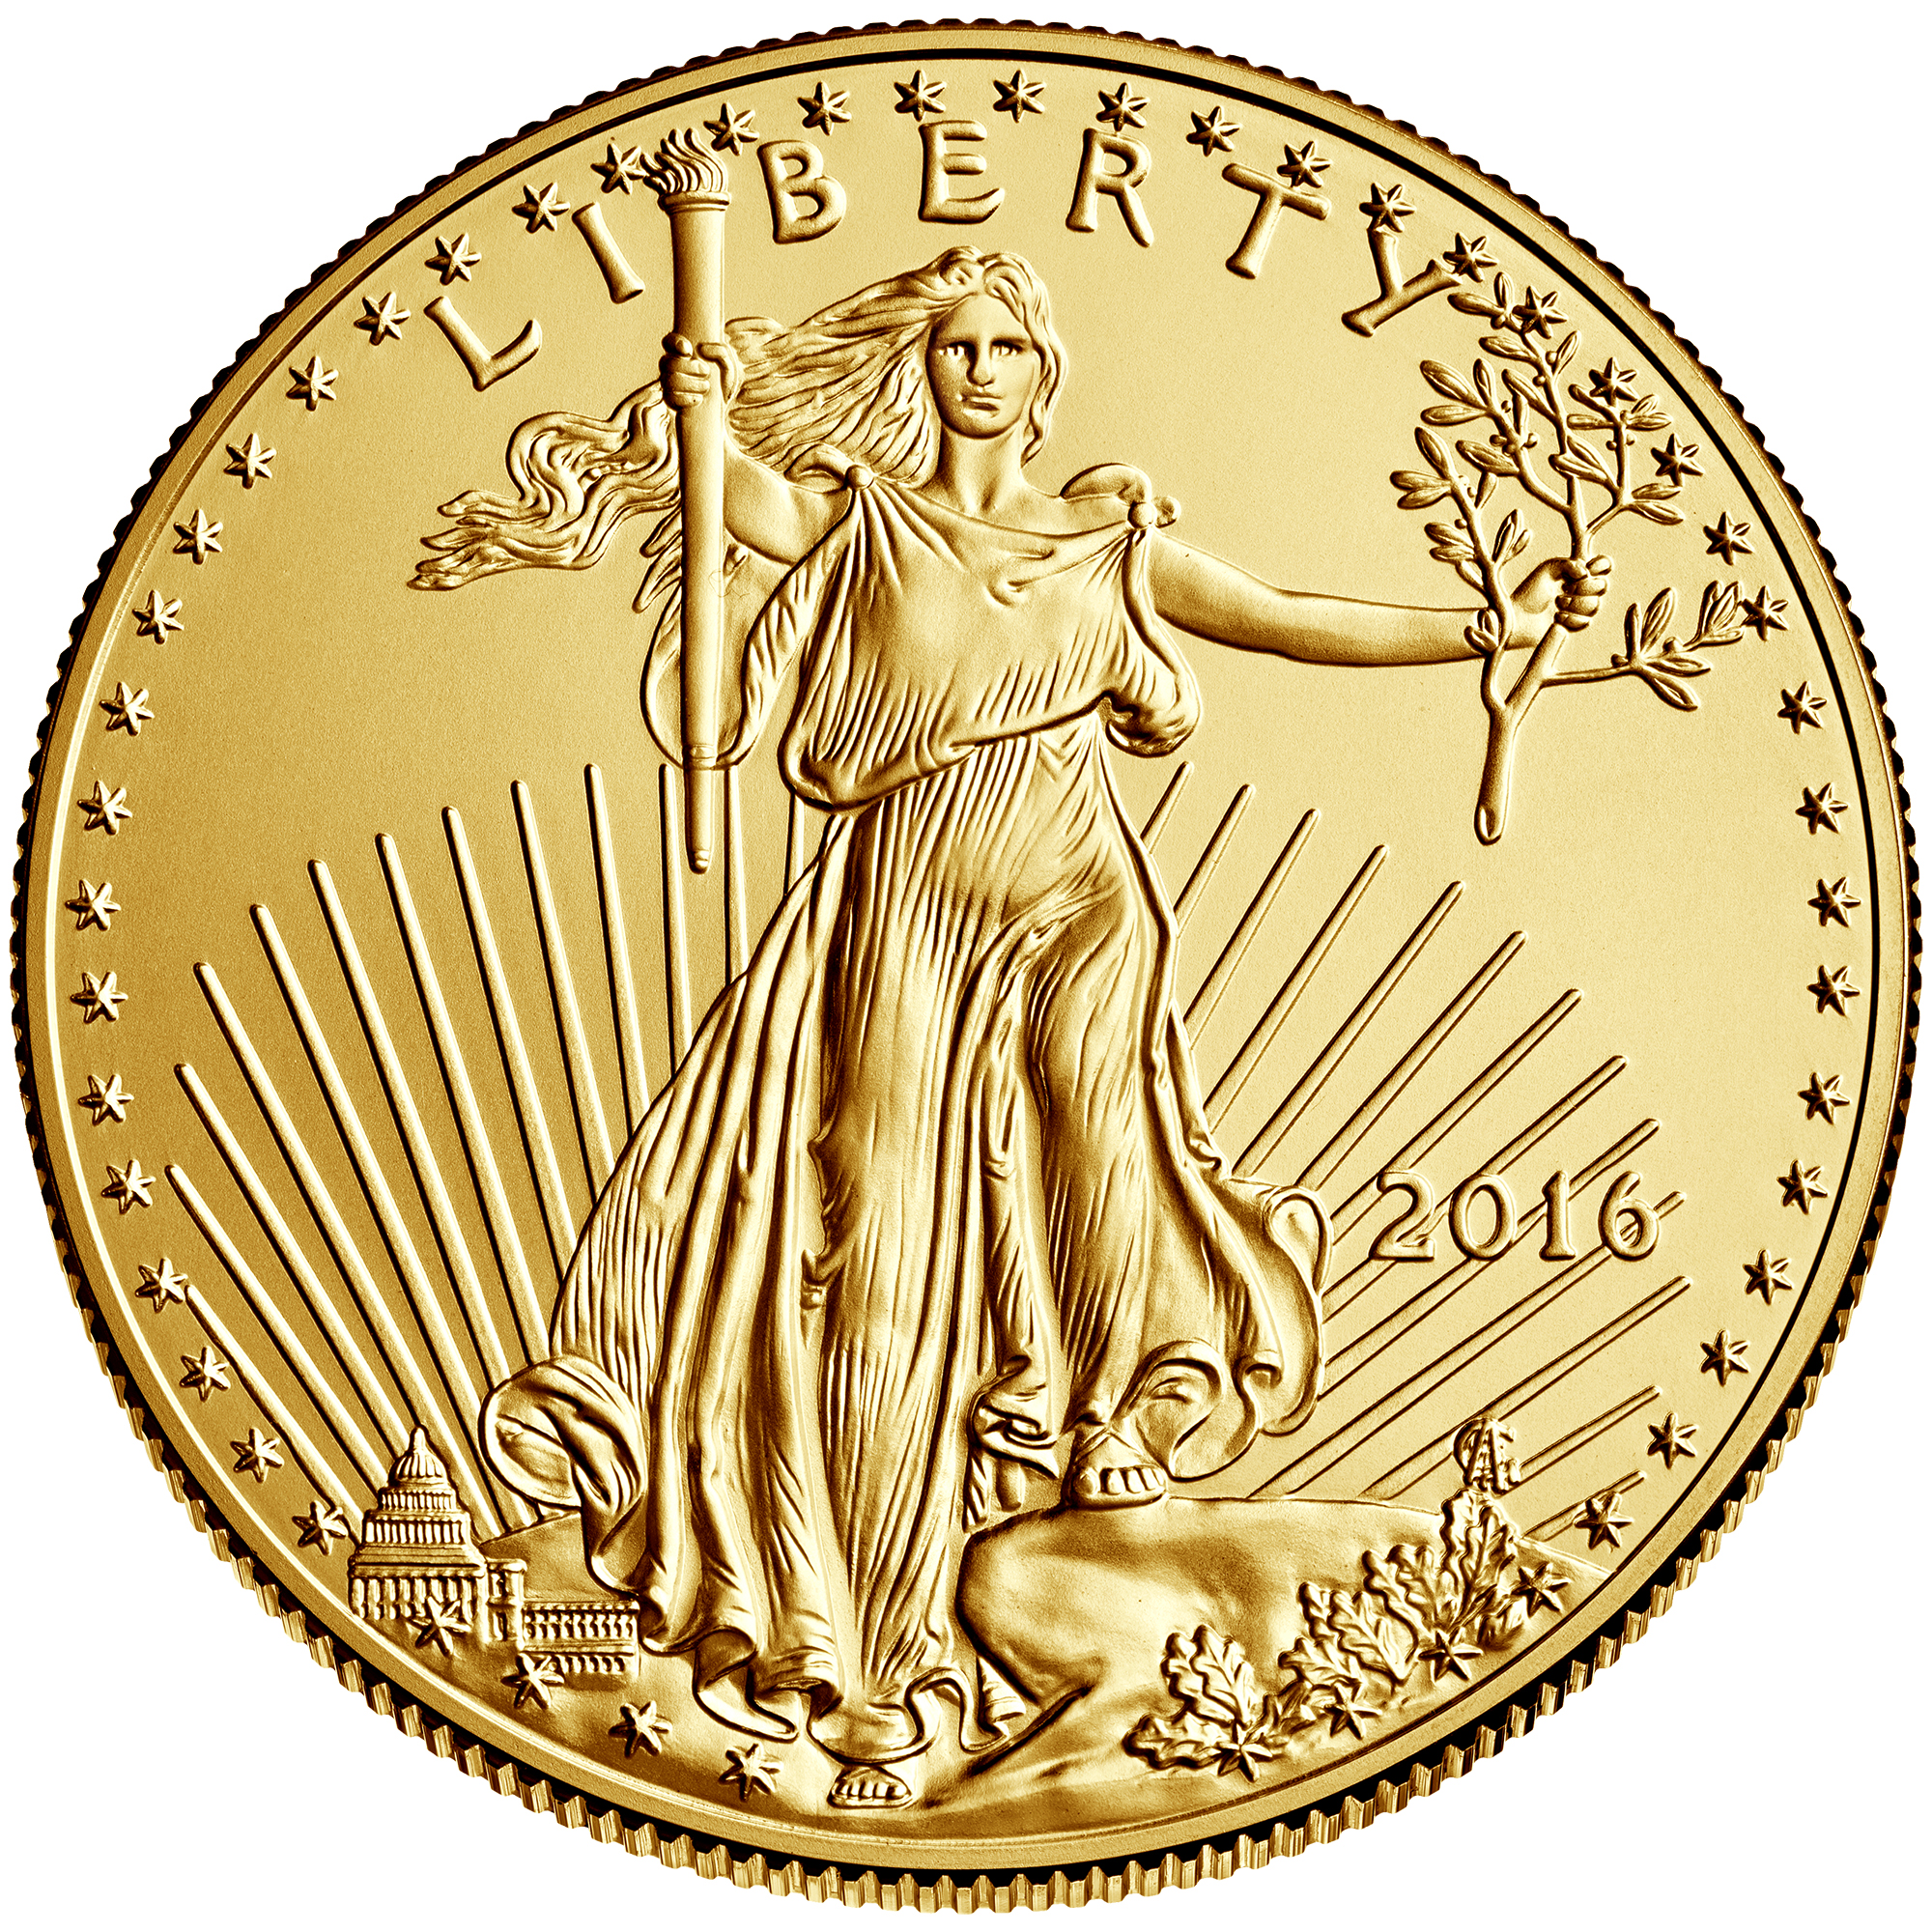 2016 1/4 oz American Eagle Gold Bullion Coin - Obverse side (Type I)